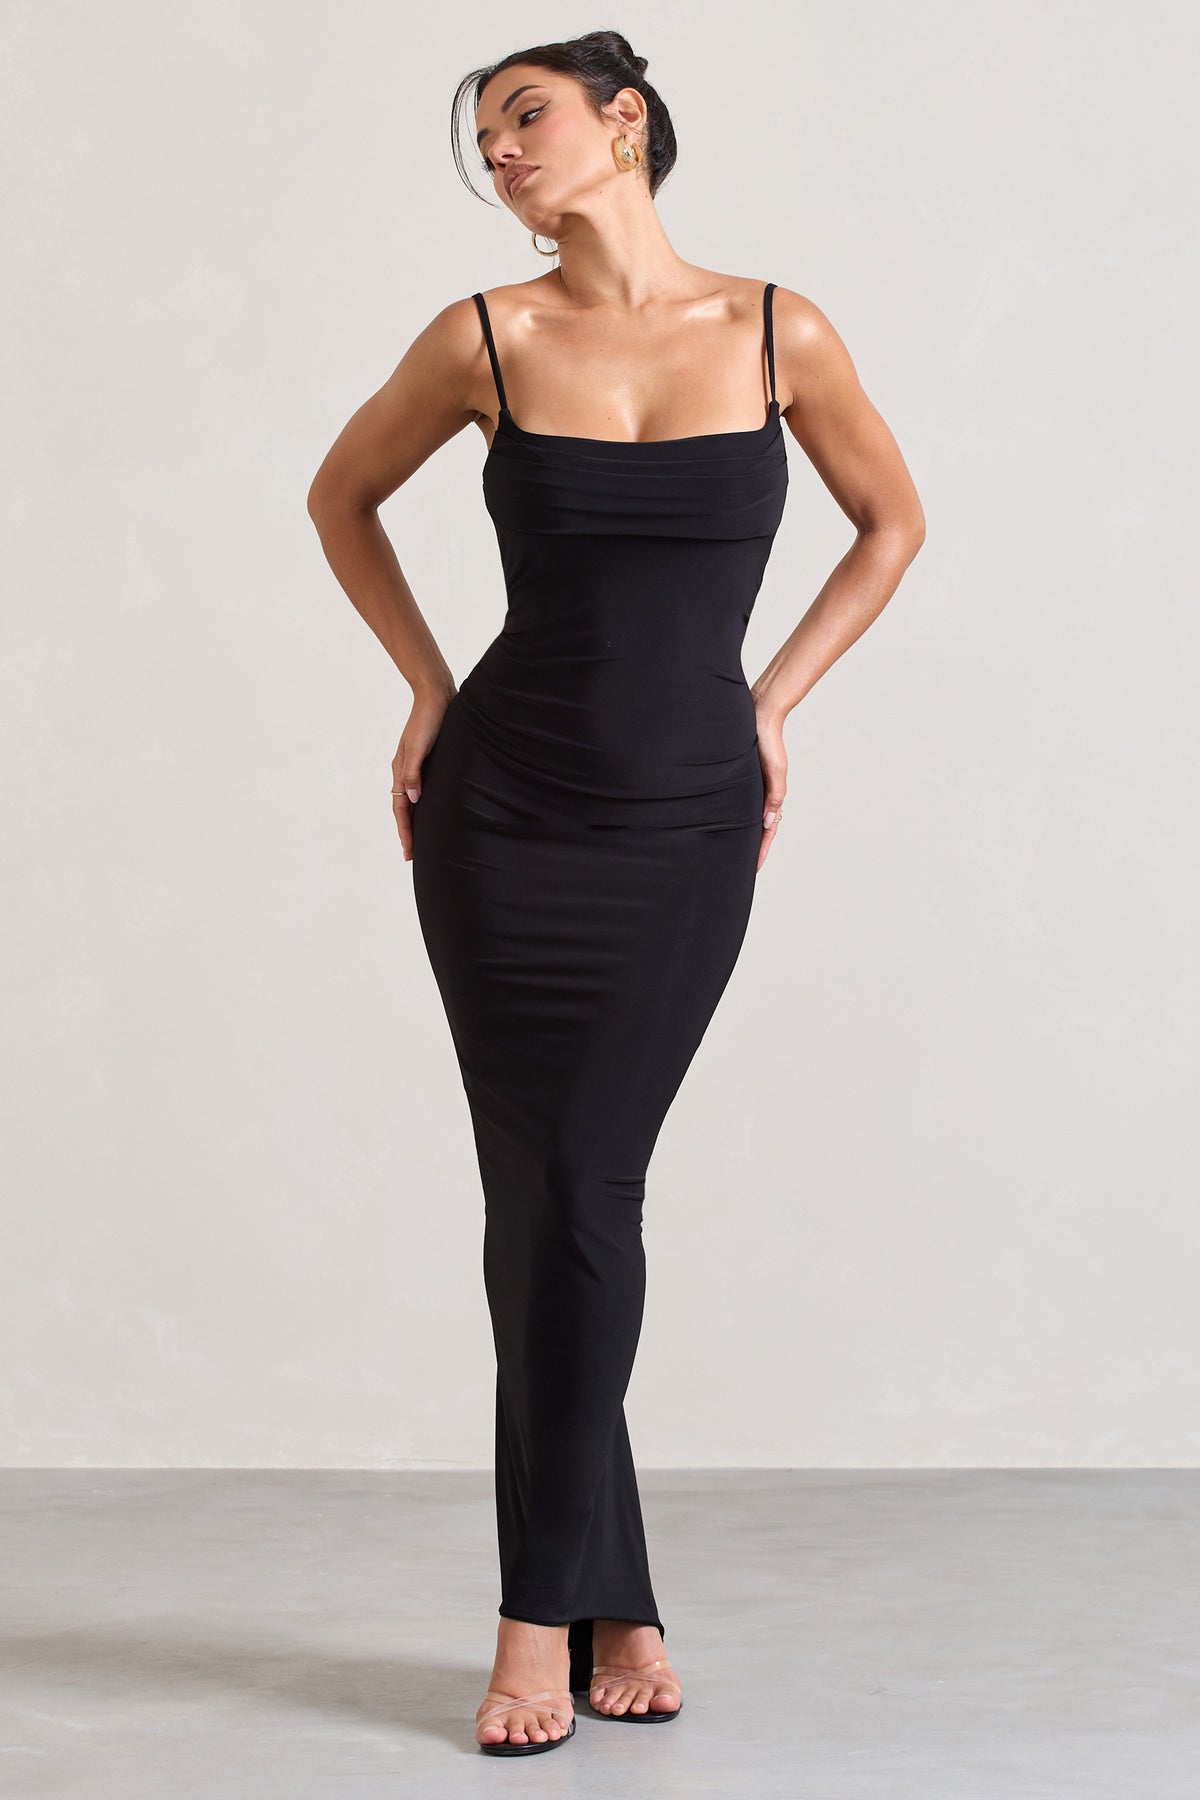 Siren Black One Shoulder Bodycon Mini Dress – Club L London - UK